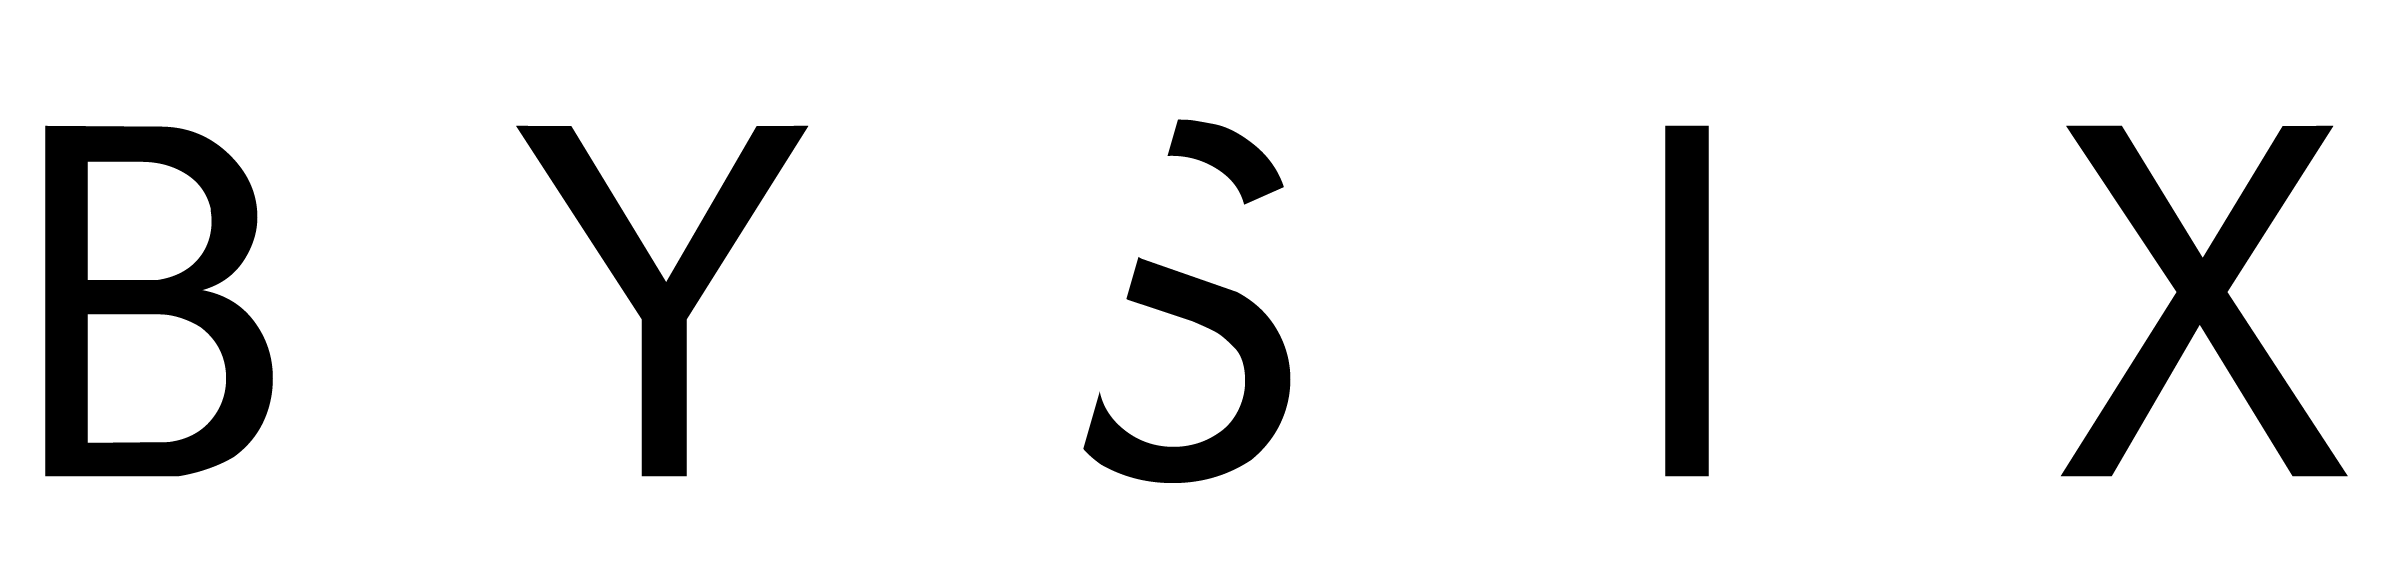 logo bysix